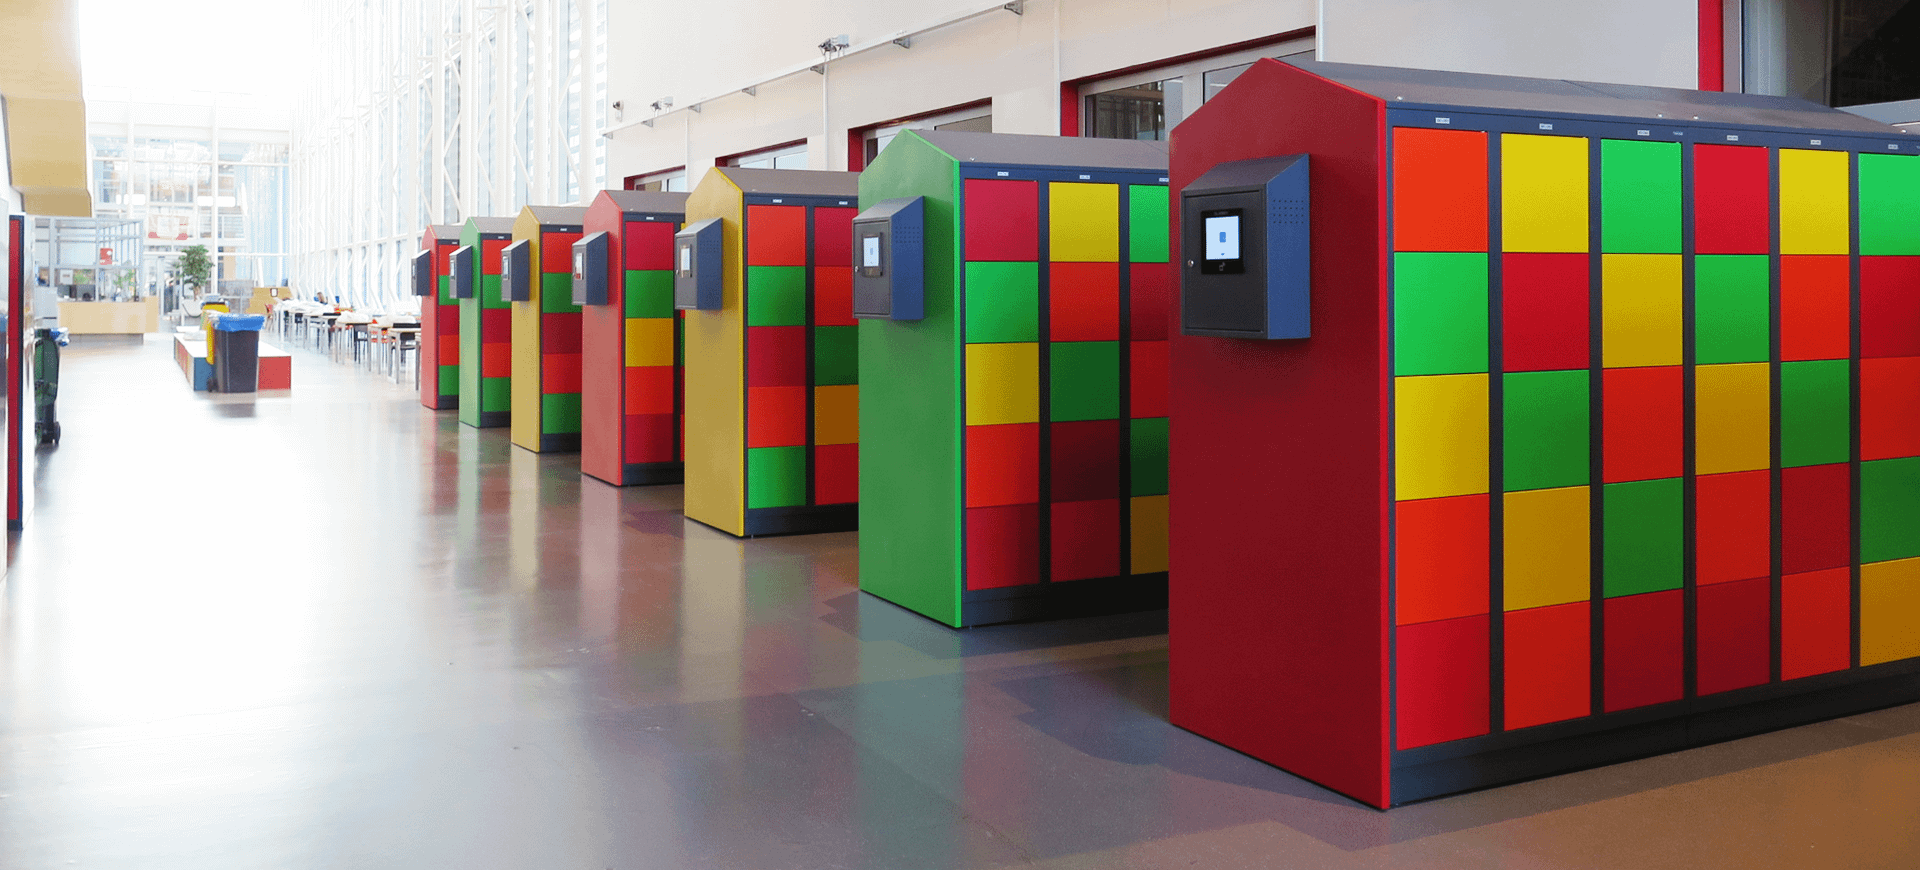 Electronic luggage lockers